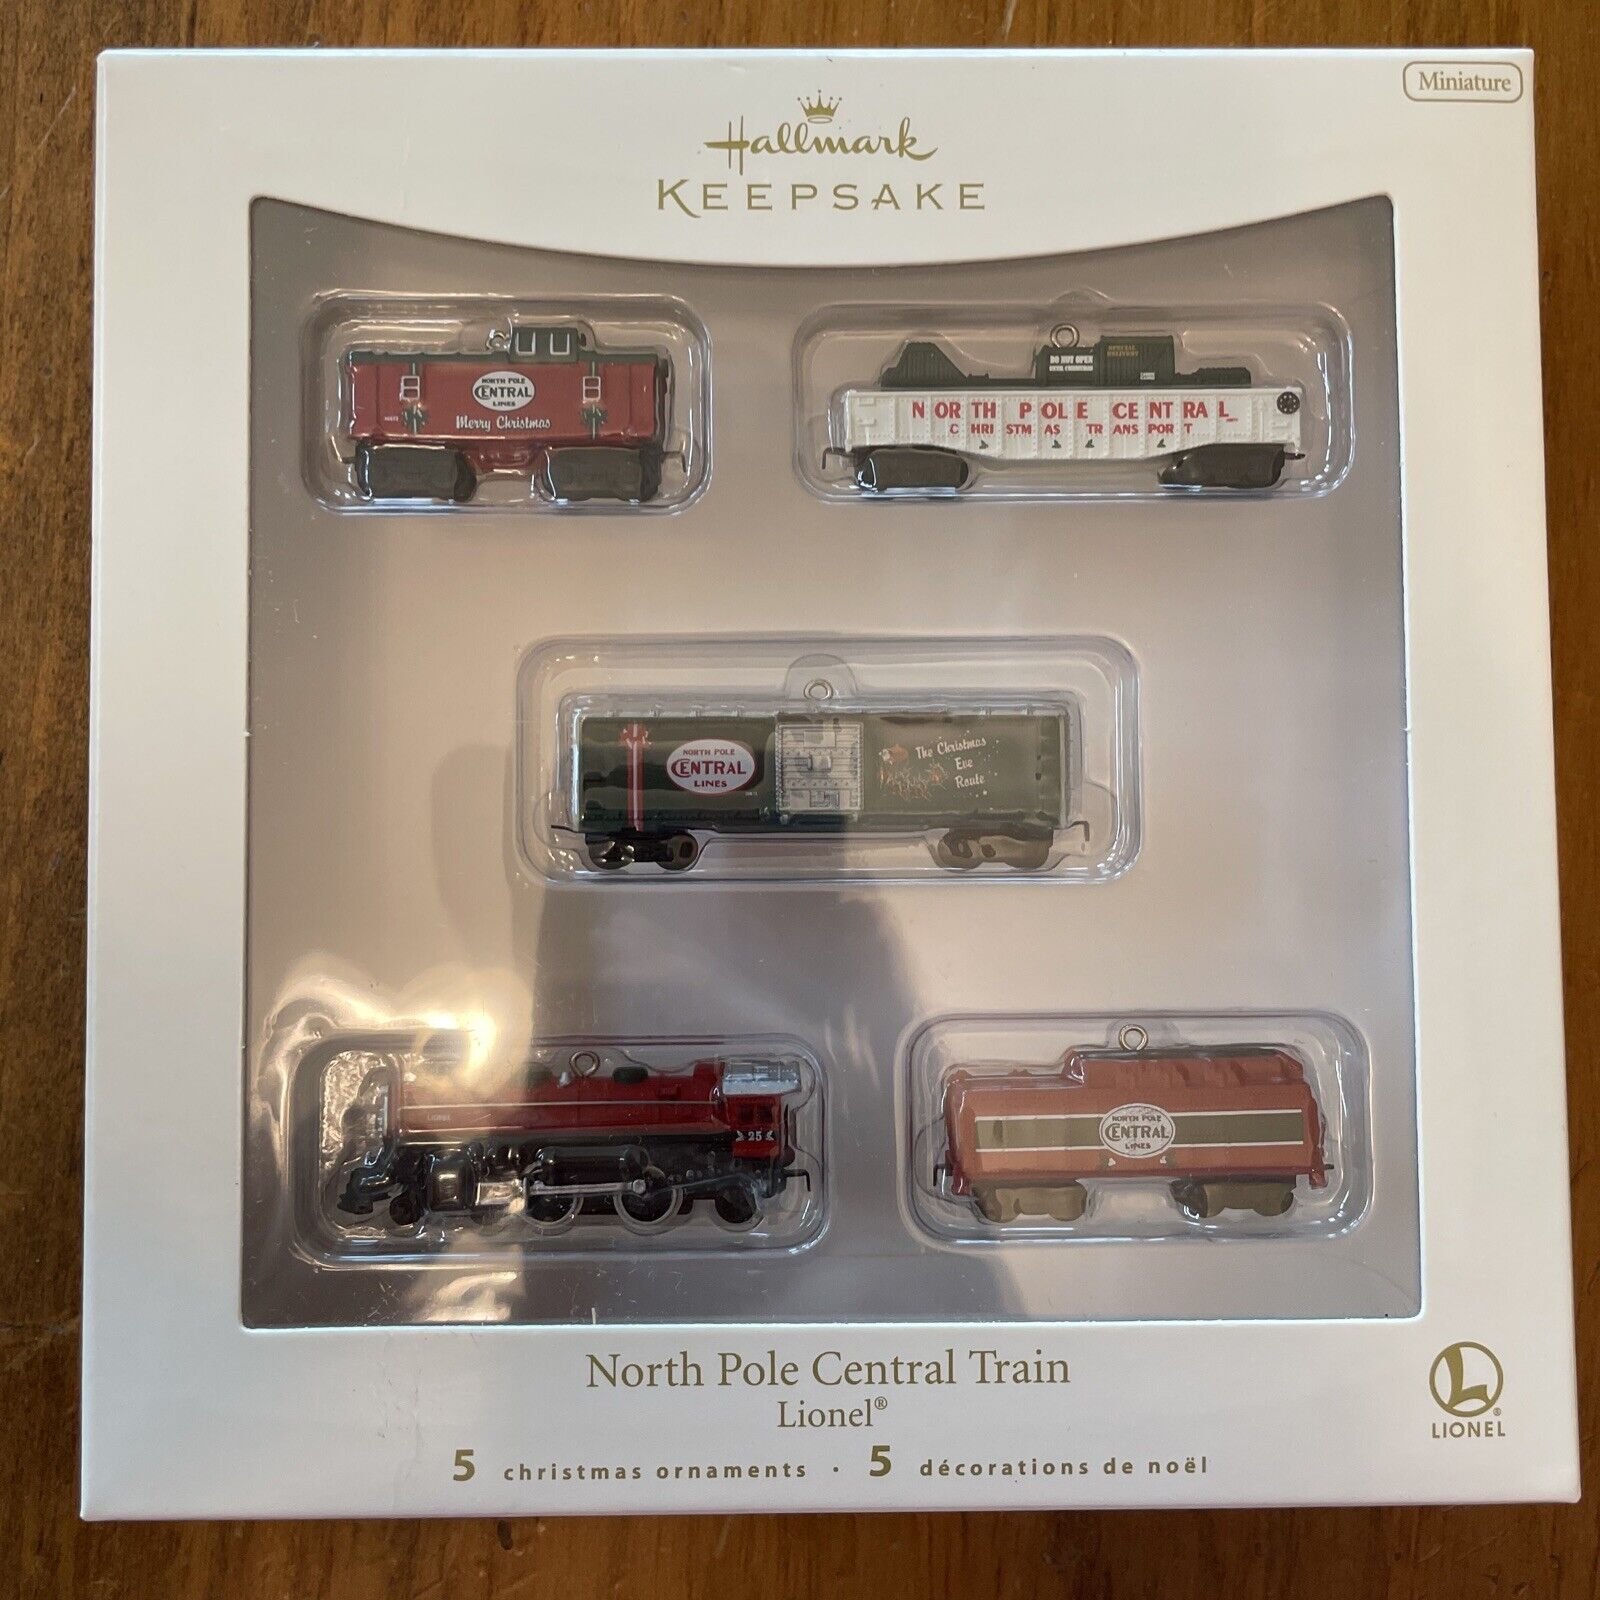 2007 North Pole Central Train Lionel Hallmark Keepsake Miniature Ornament Set